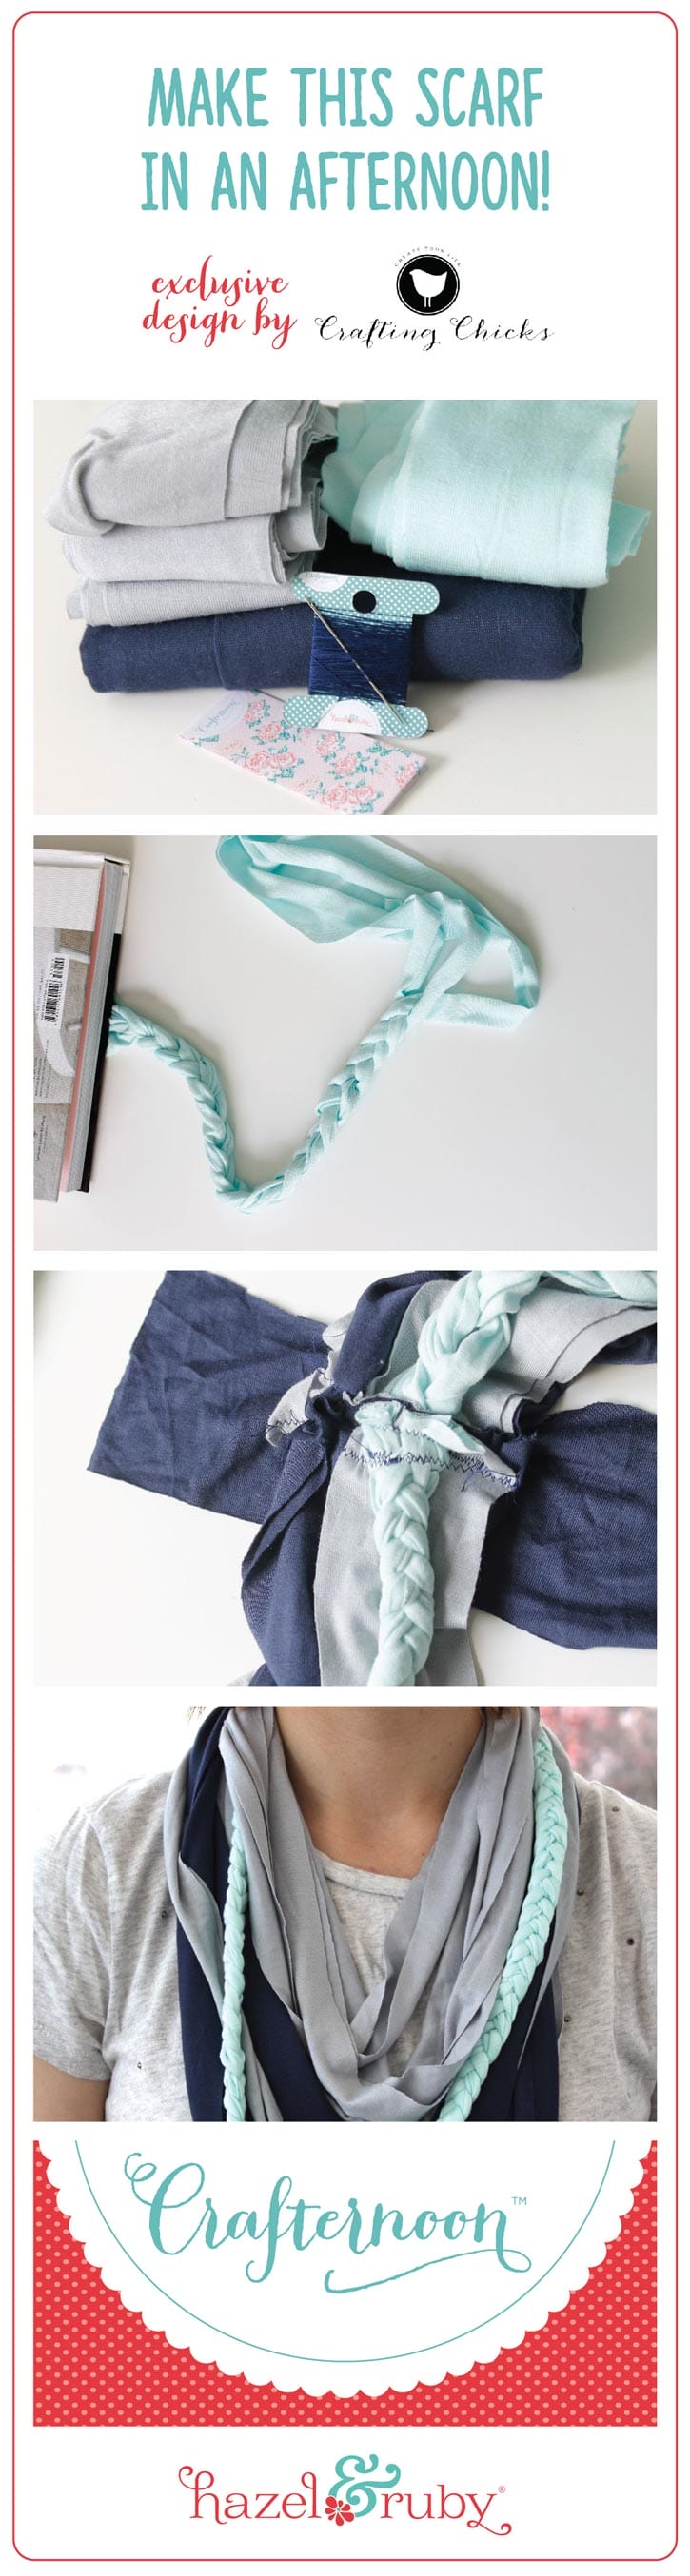 Jersey Knit Scarf Crafternoon Kit